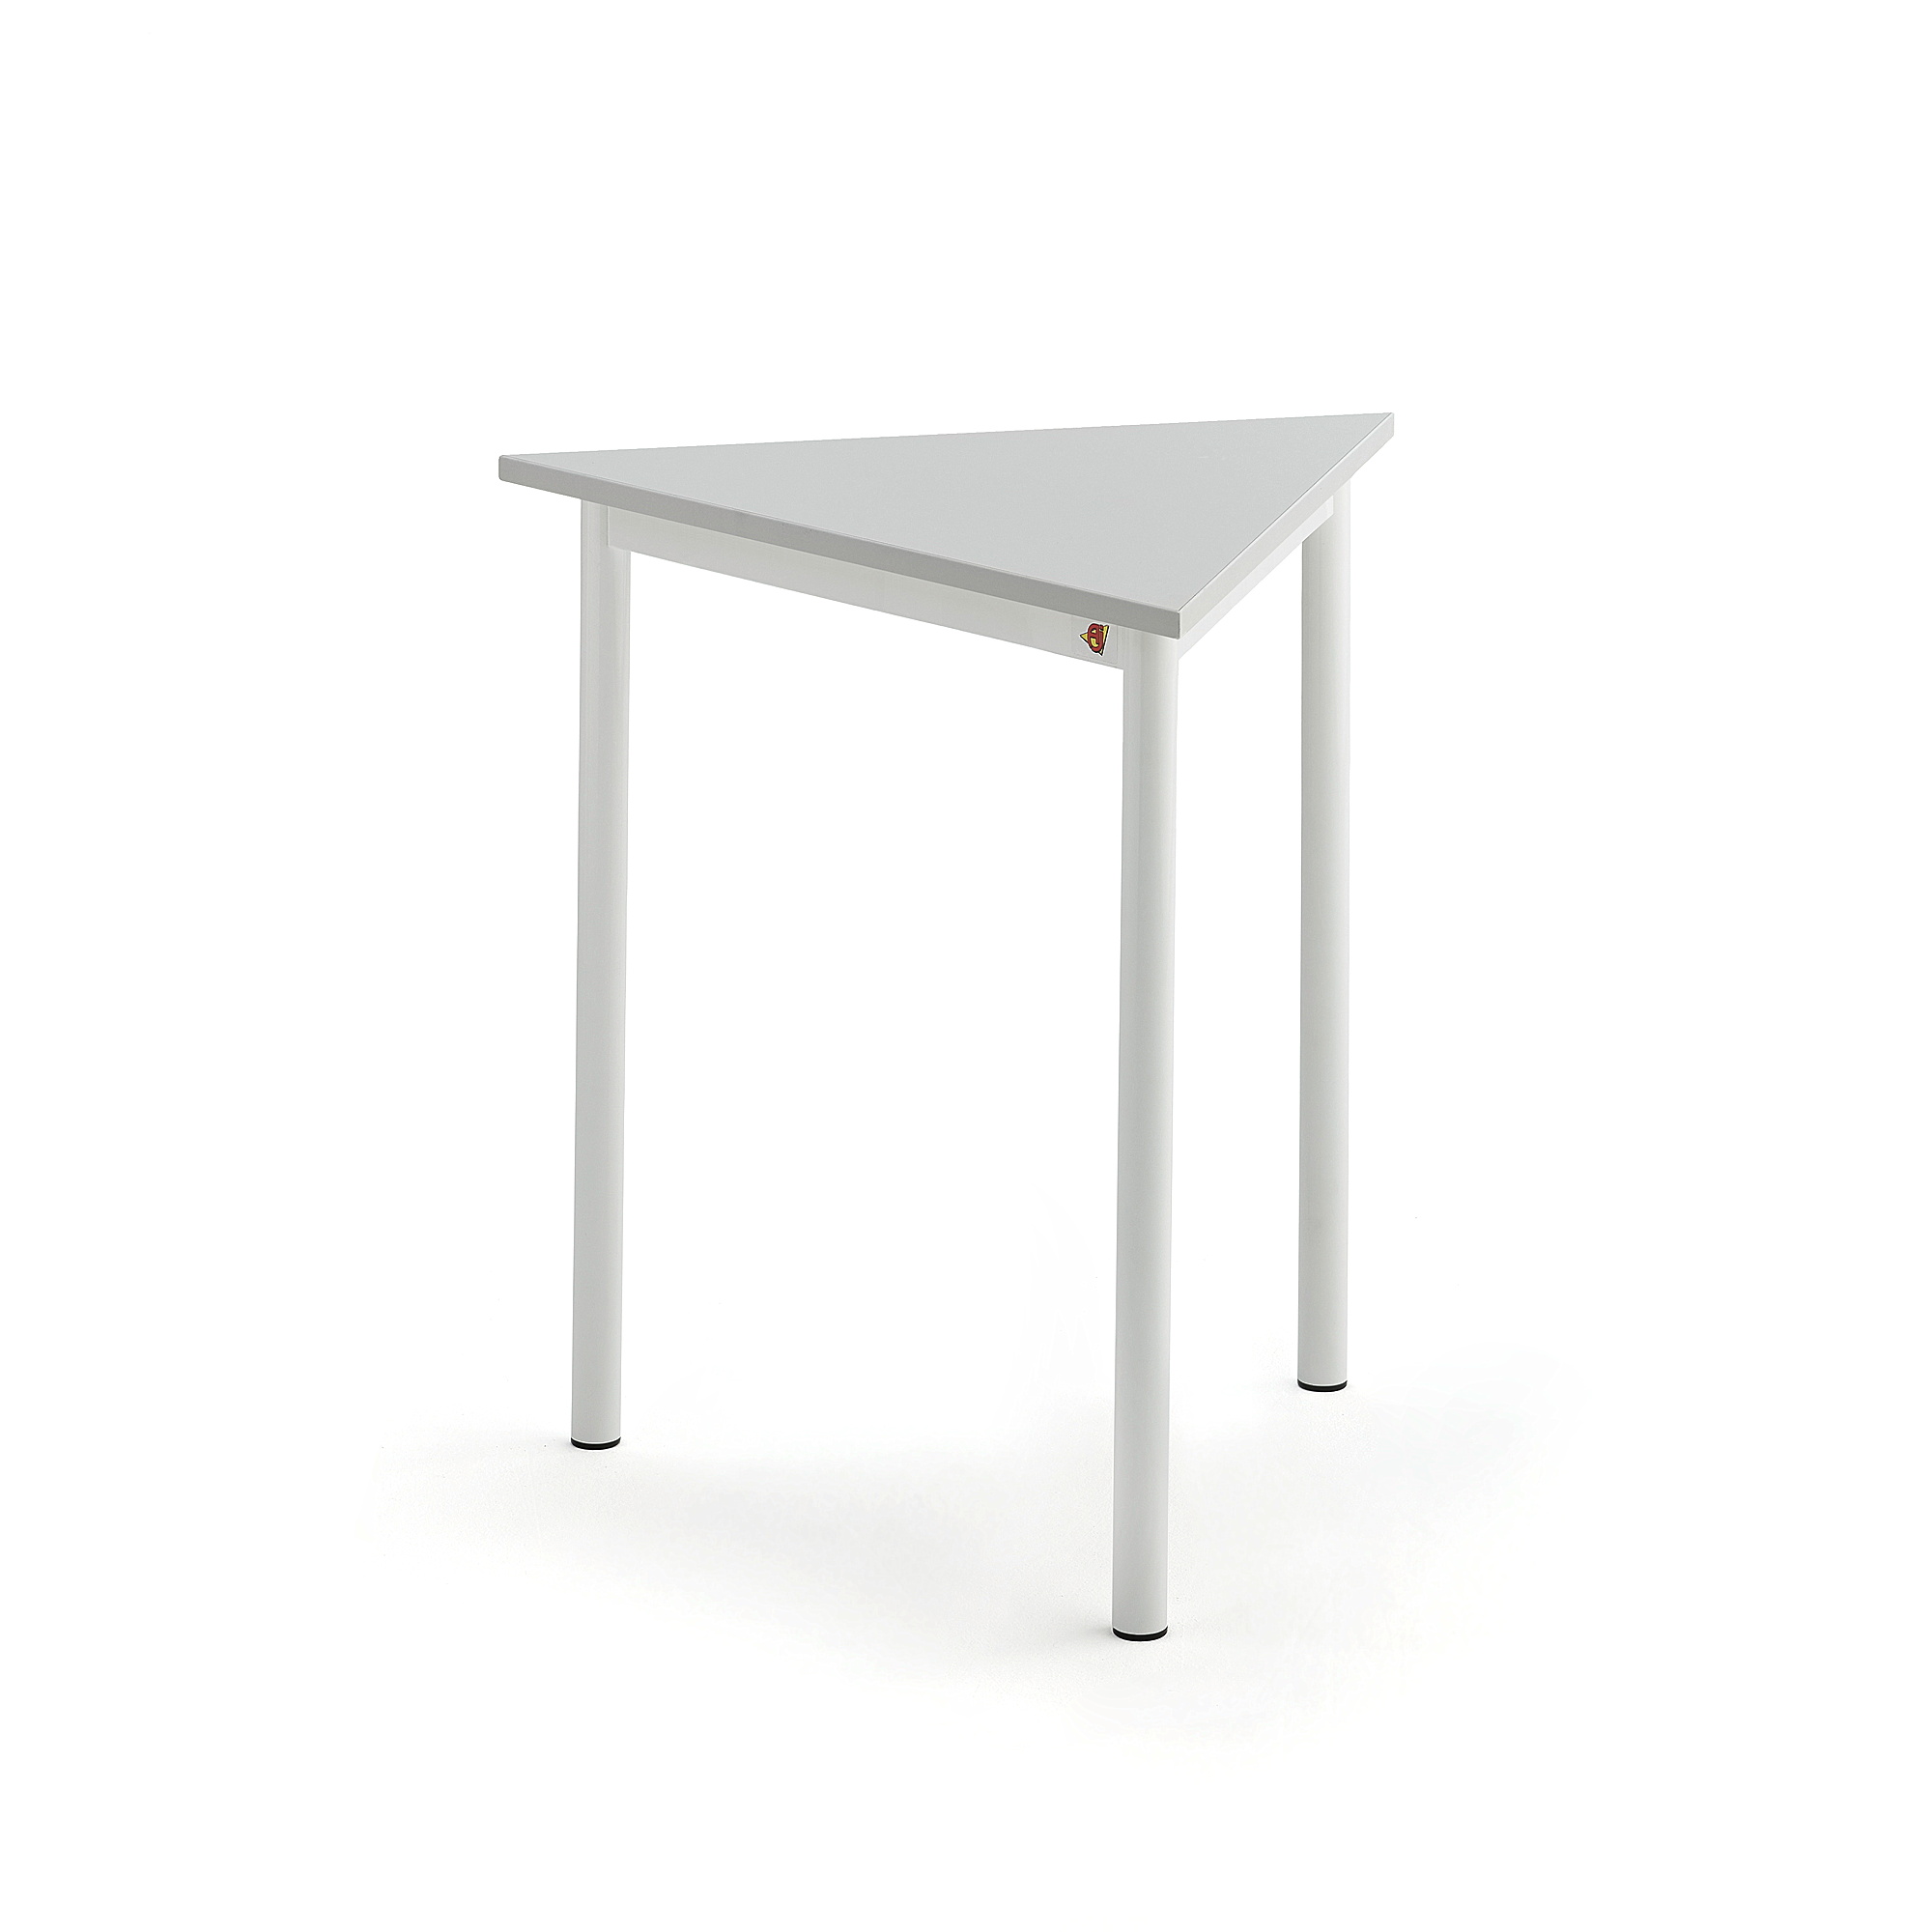 Stůl SONITUS TRIANGEL, 700x700x720 mm, bílé nohy, HPL deska tlumící hluk, šedá